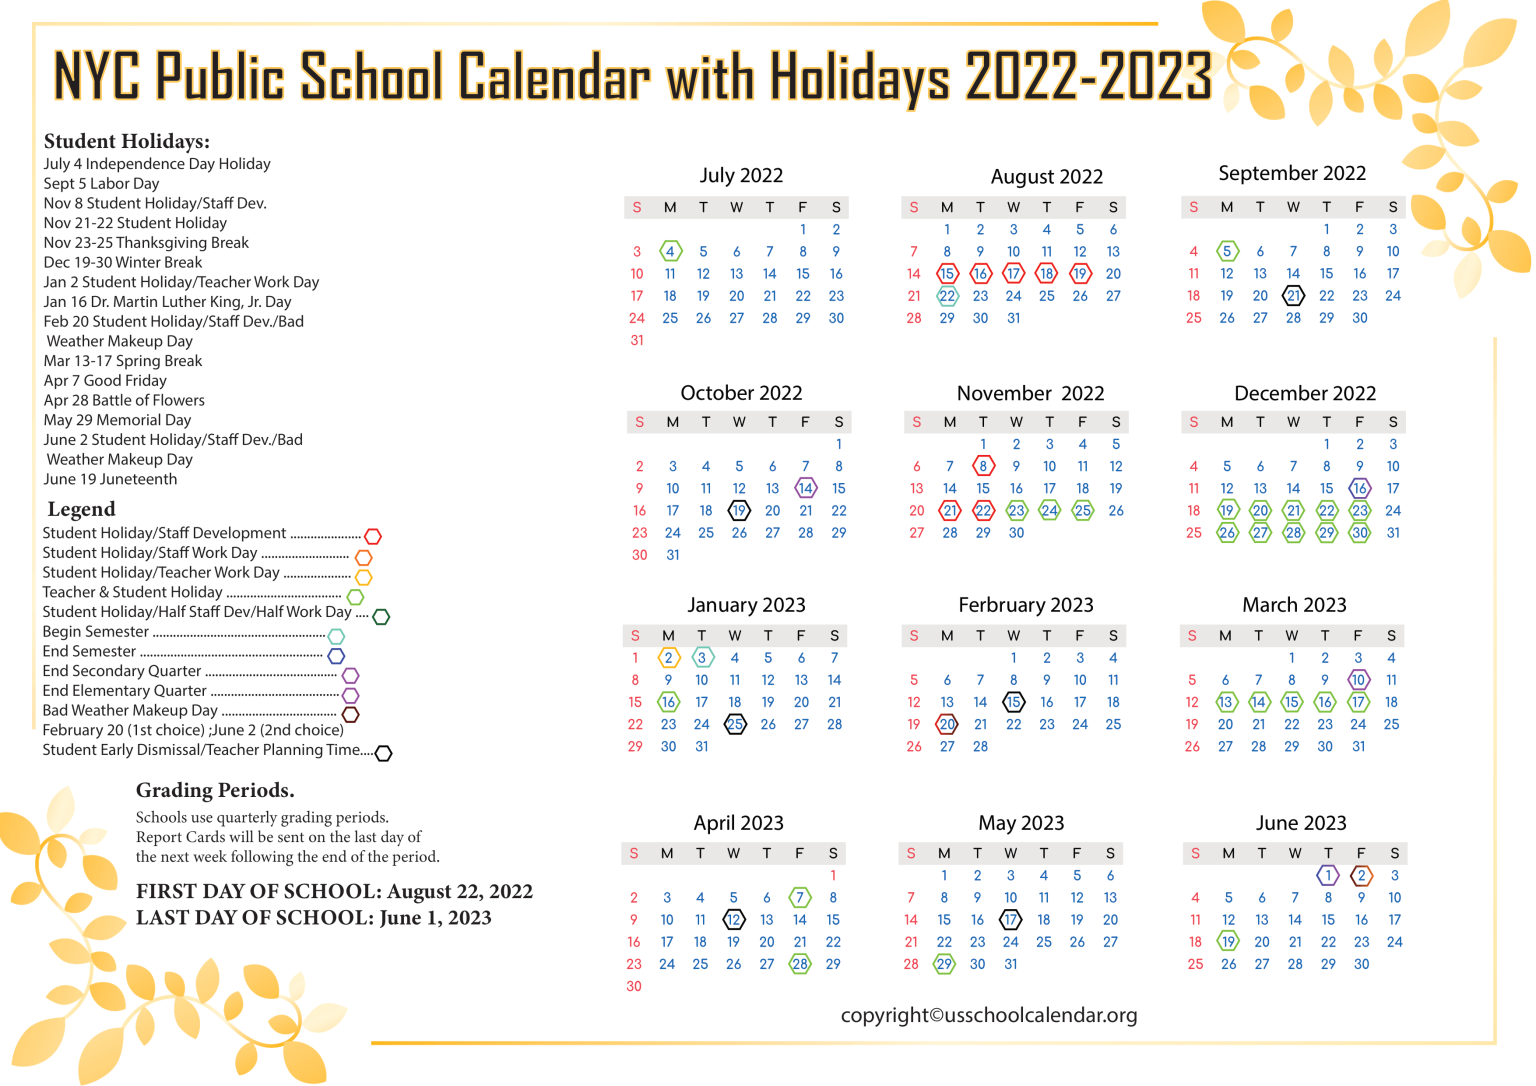 NISD School Calendar with Holidays 20222023 [Northside ISD]